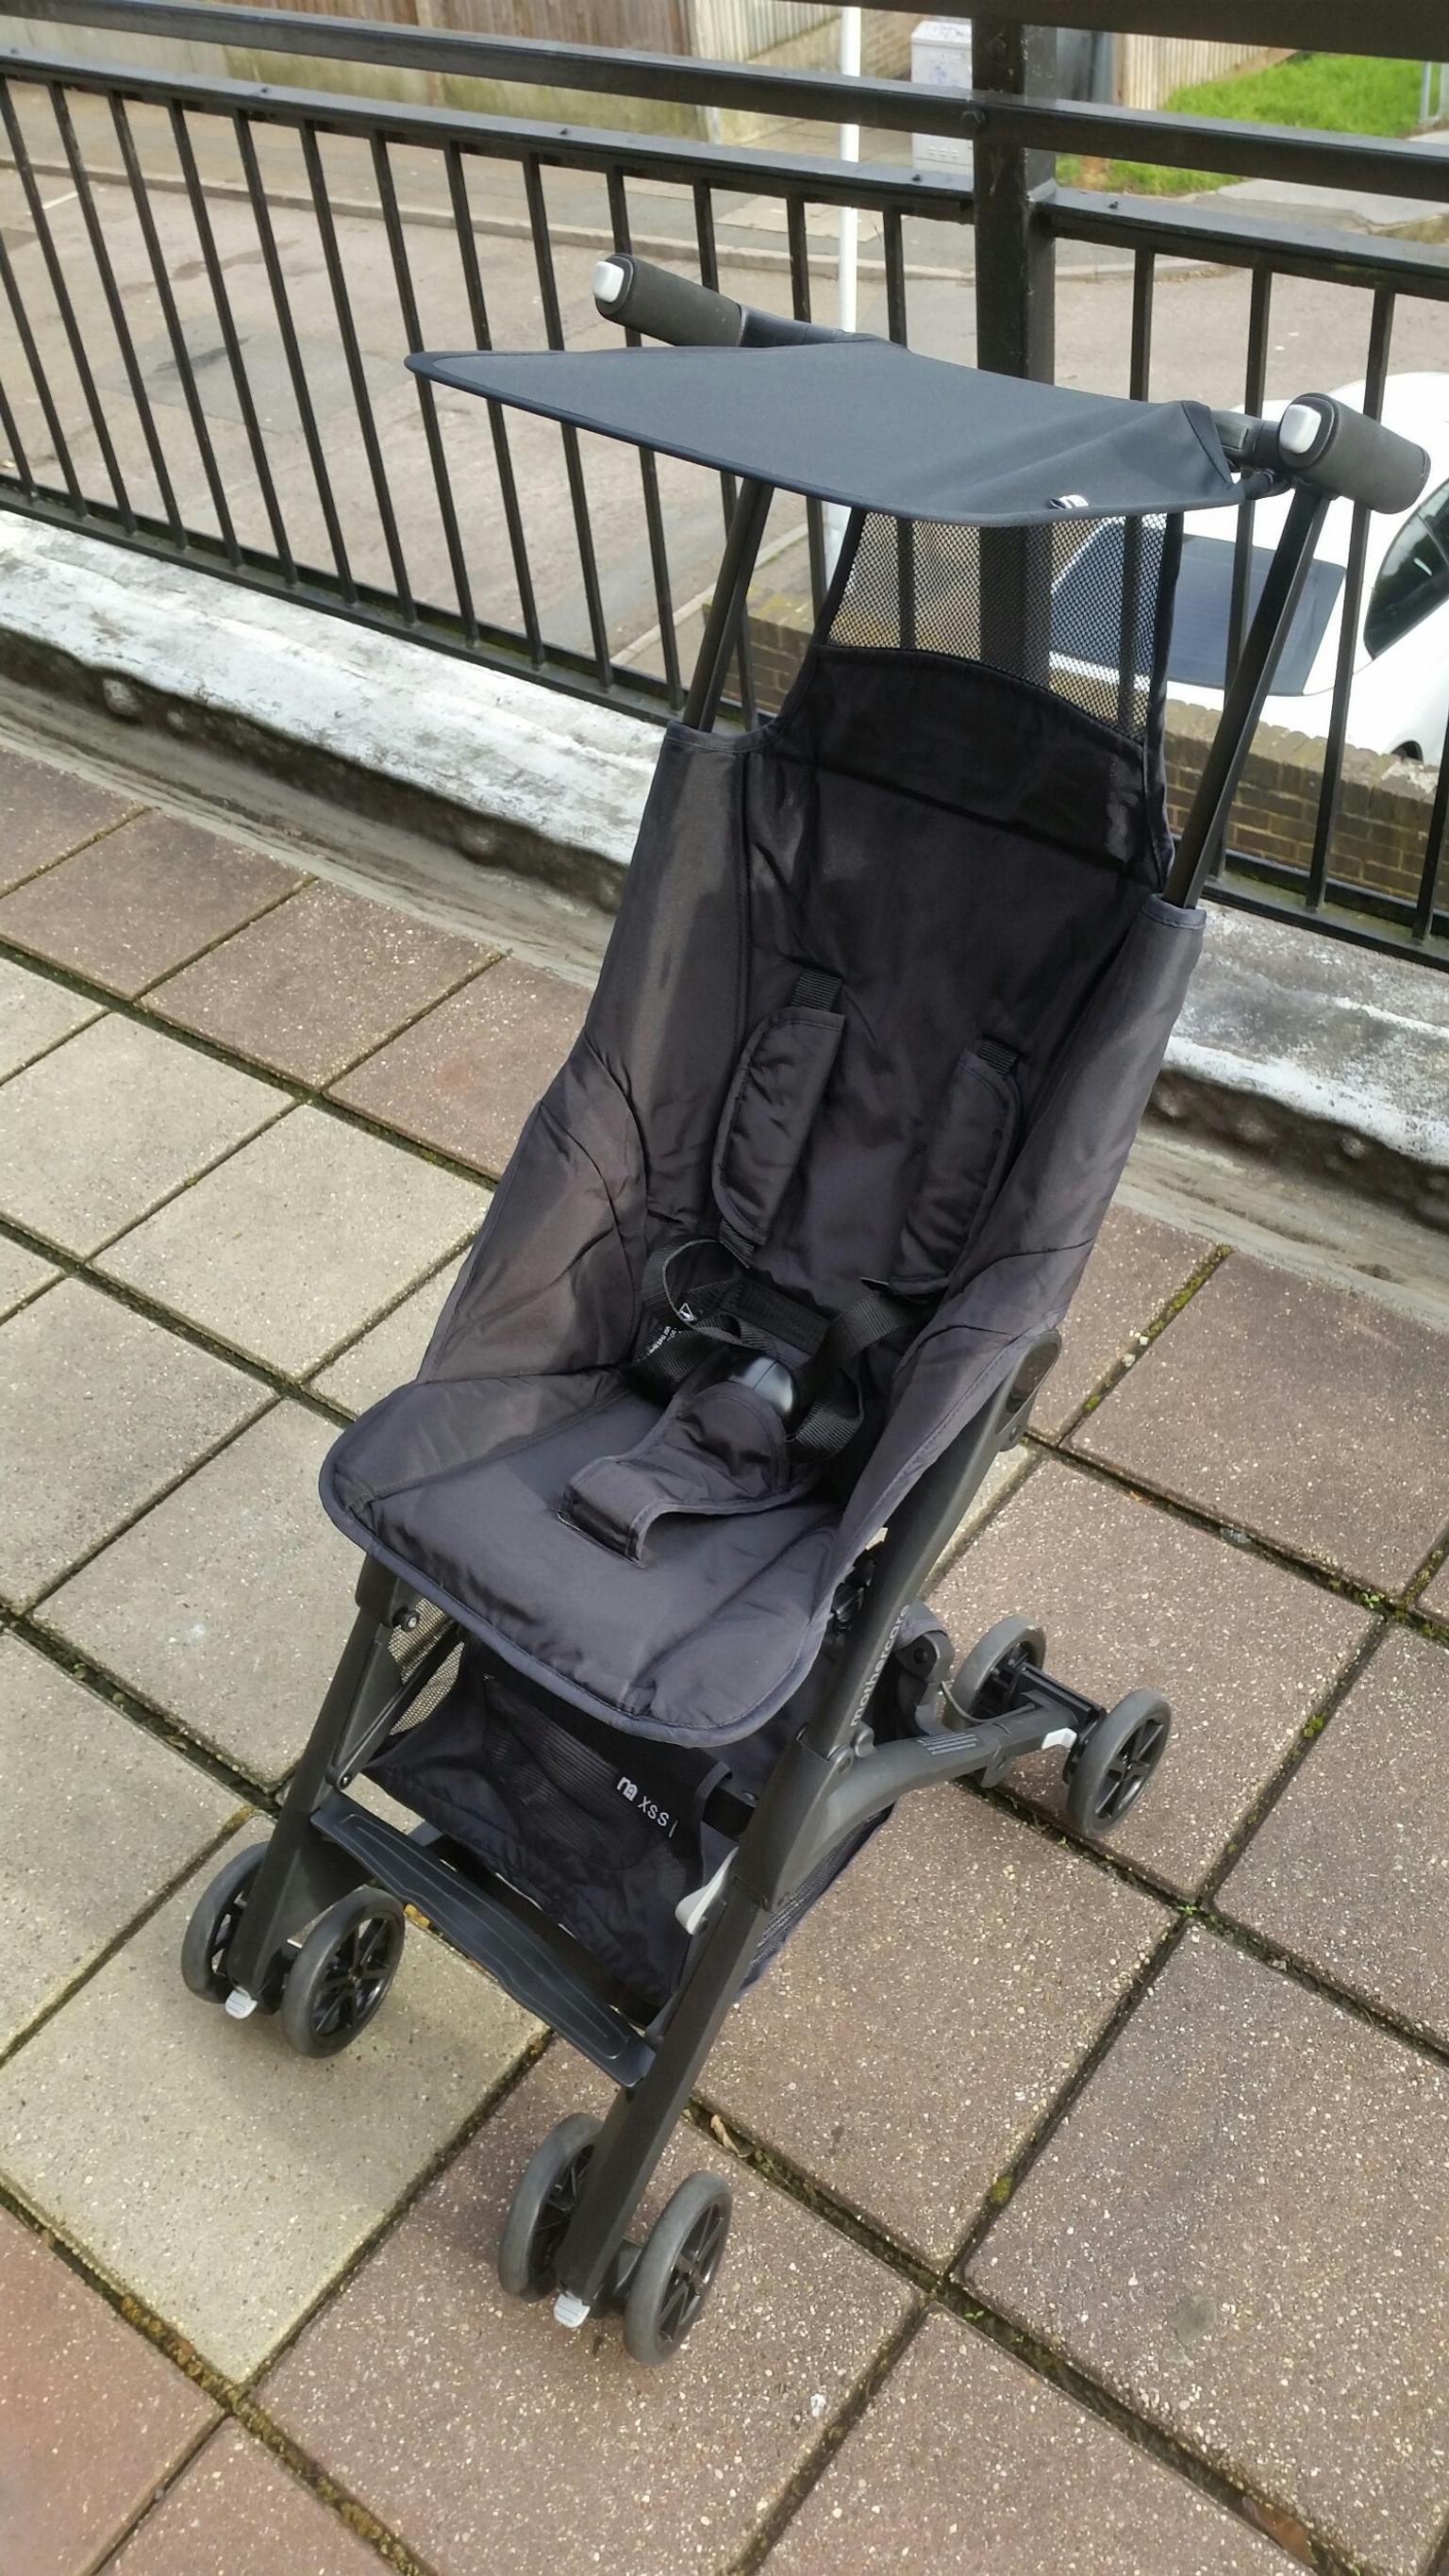 gb pockit stroller mothercare